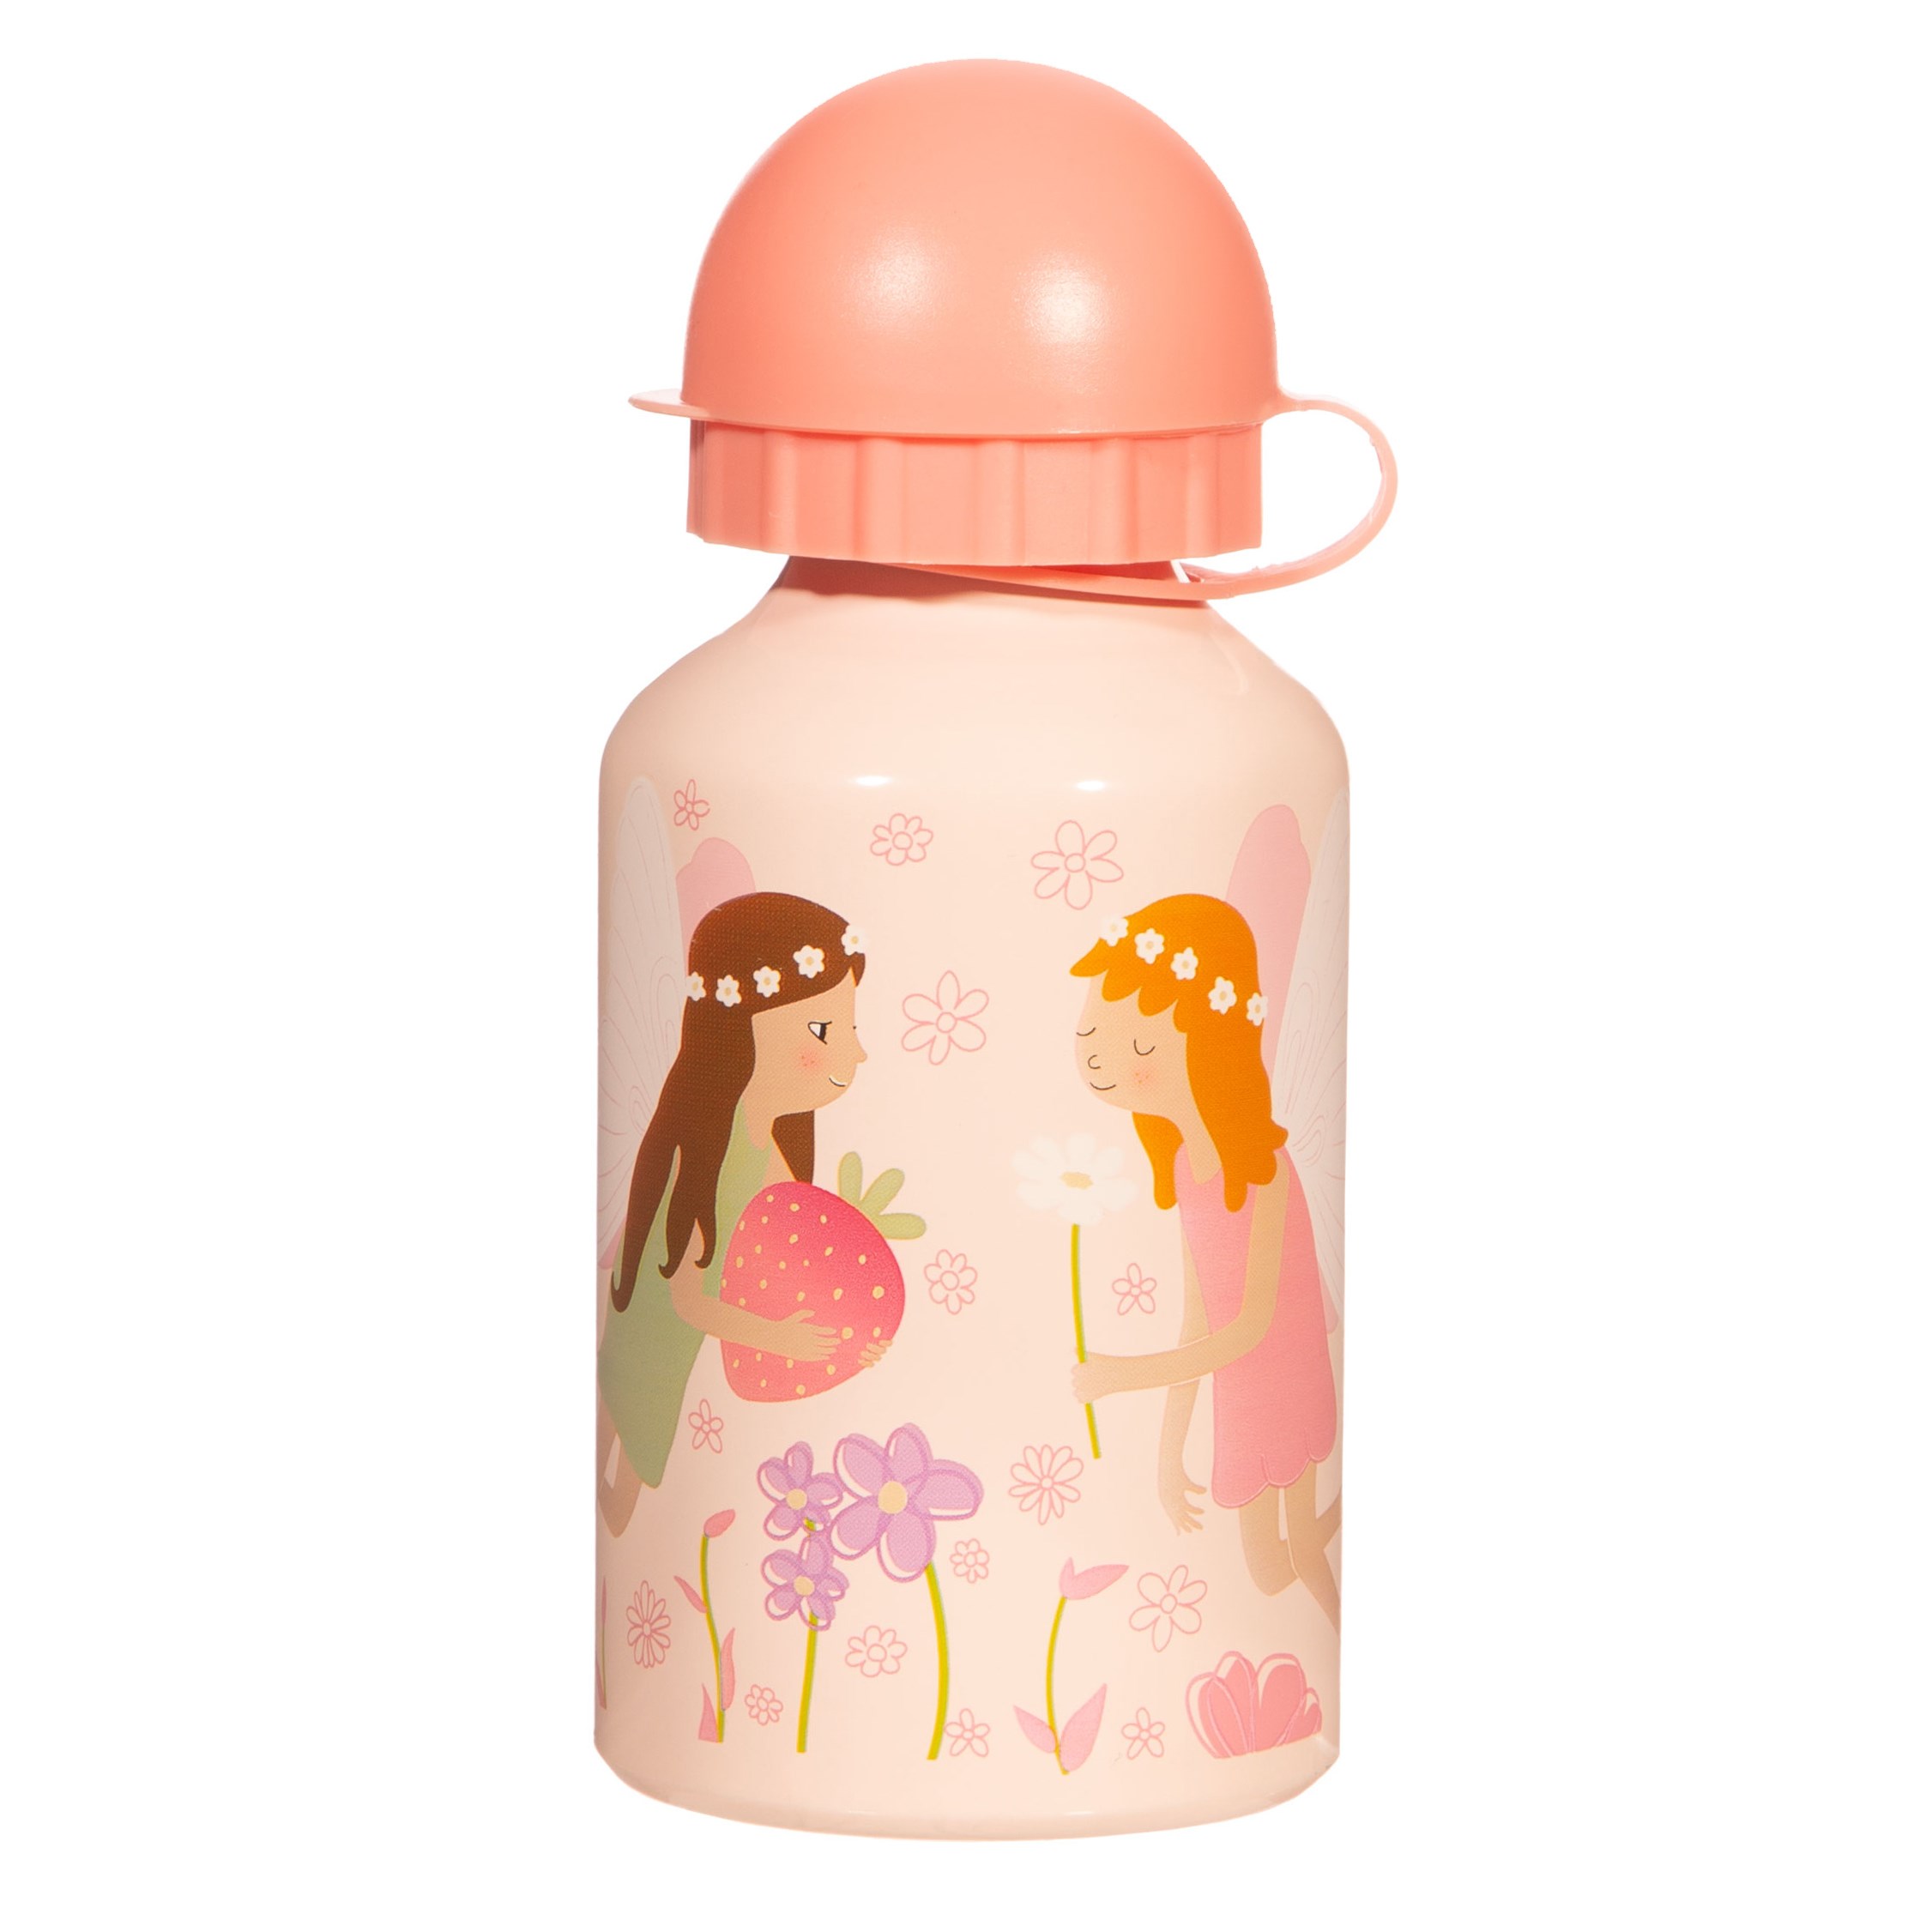 Sass and Belle   Rainbow Unicorn mini milk bottle with straw 